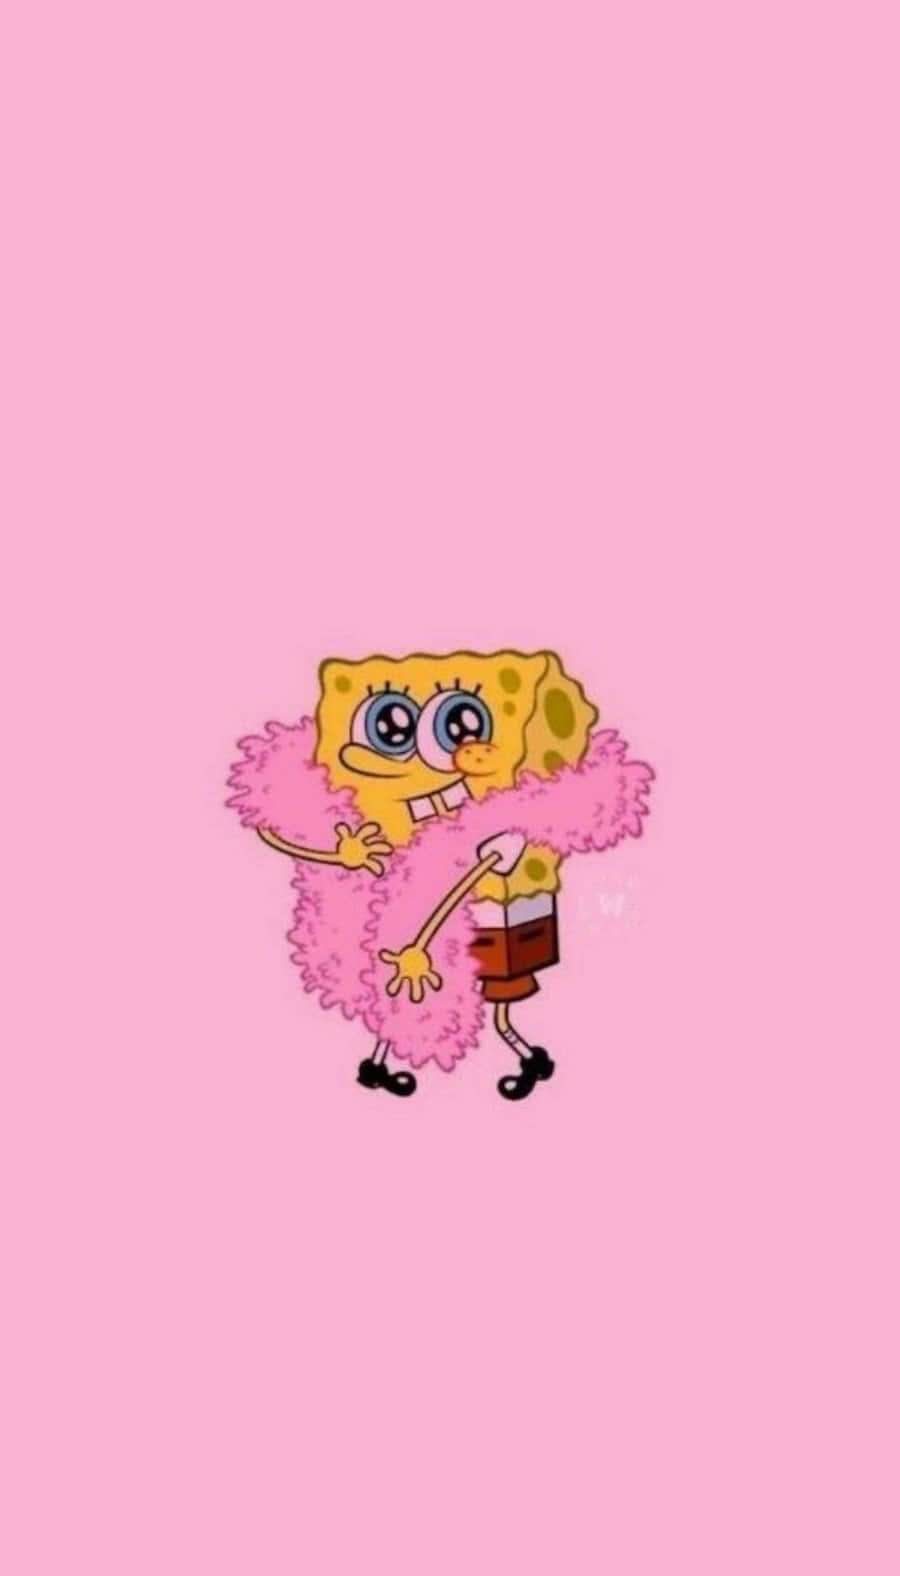 Spongebob In Pink Scarf Girly Tumblr Background